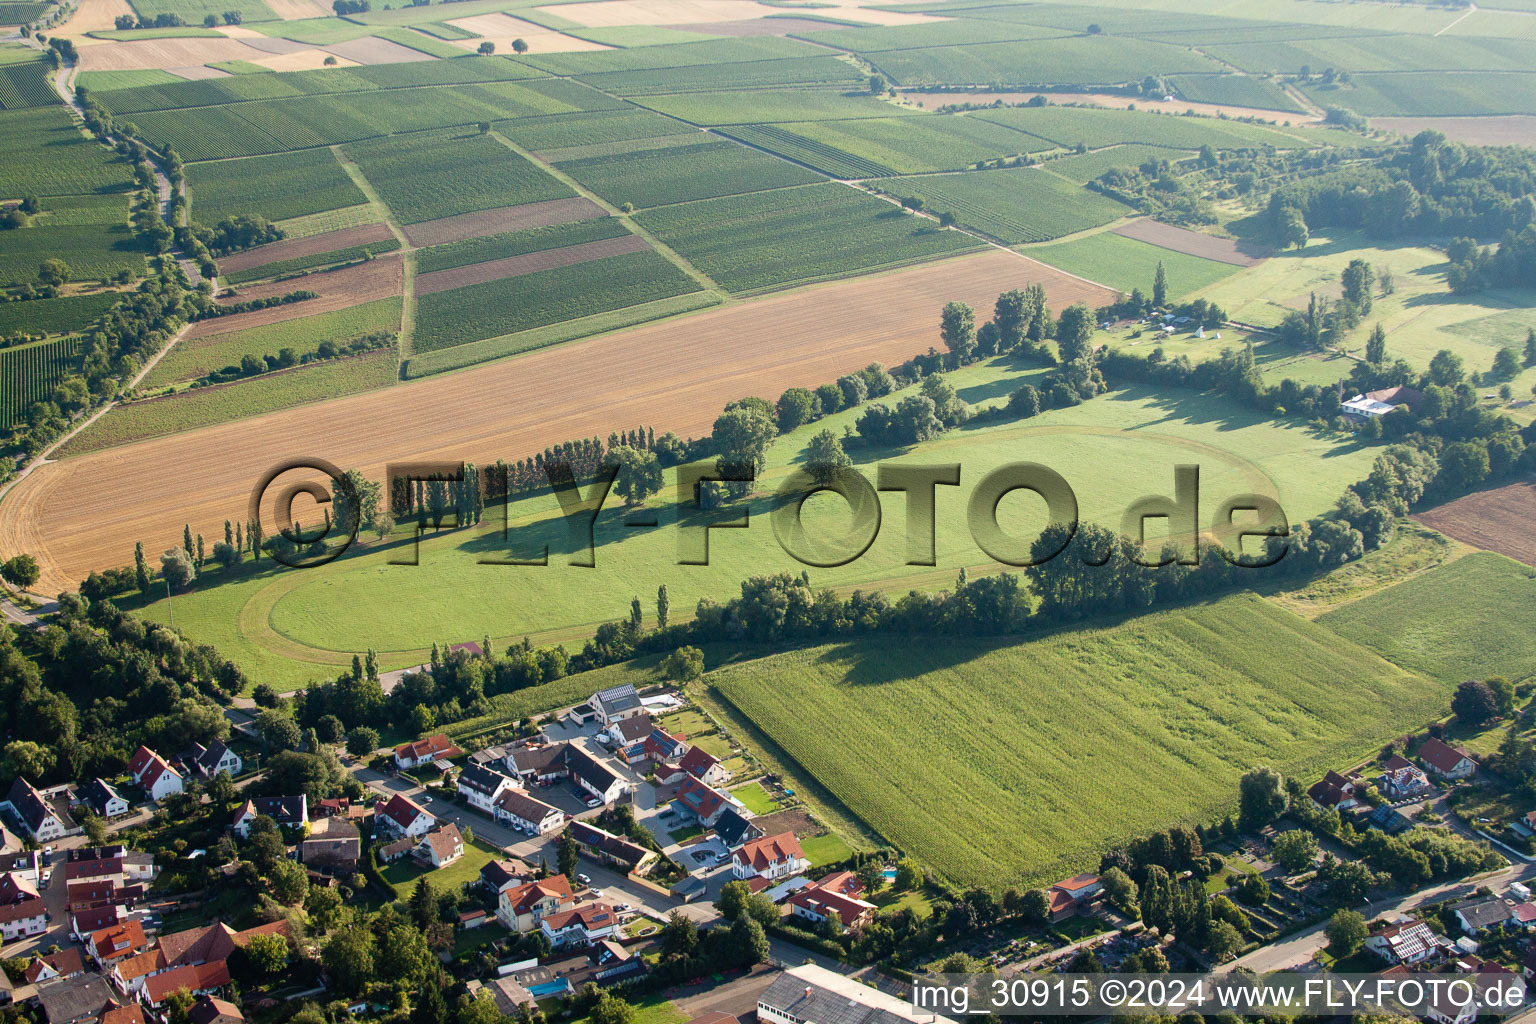 Aerial view of Racetrack racecourse - trotting in the district Billigheim in Billigheim-Ingenheim in the state Rhineland-Palatinate